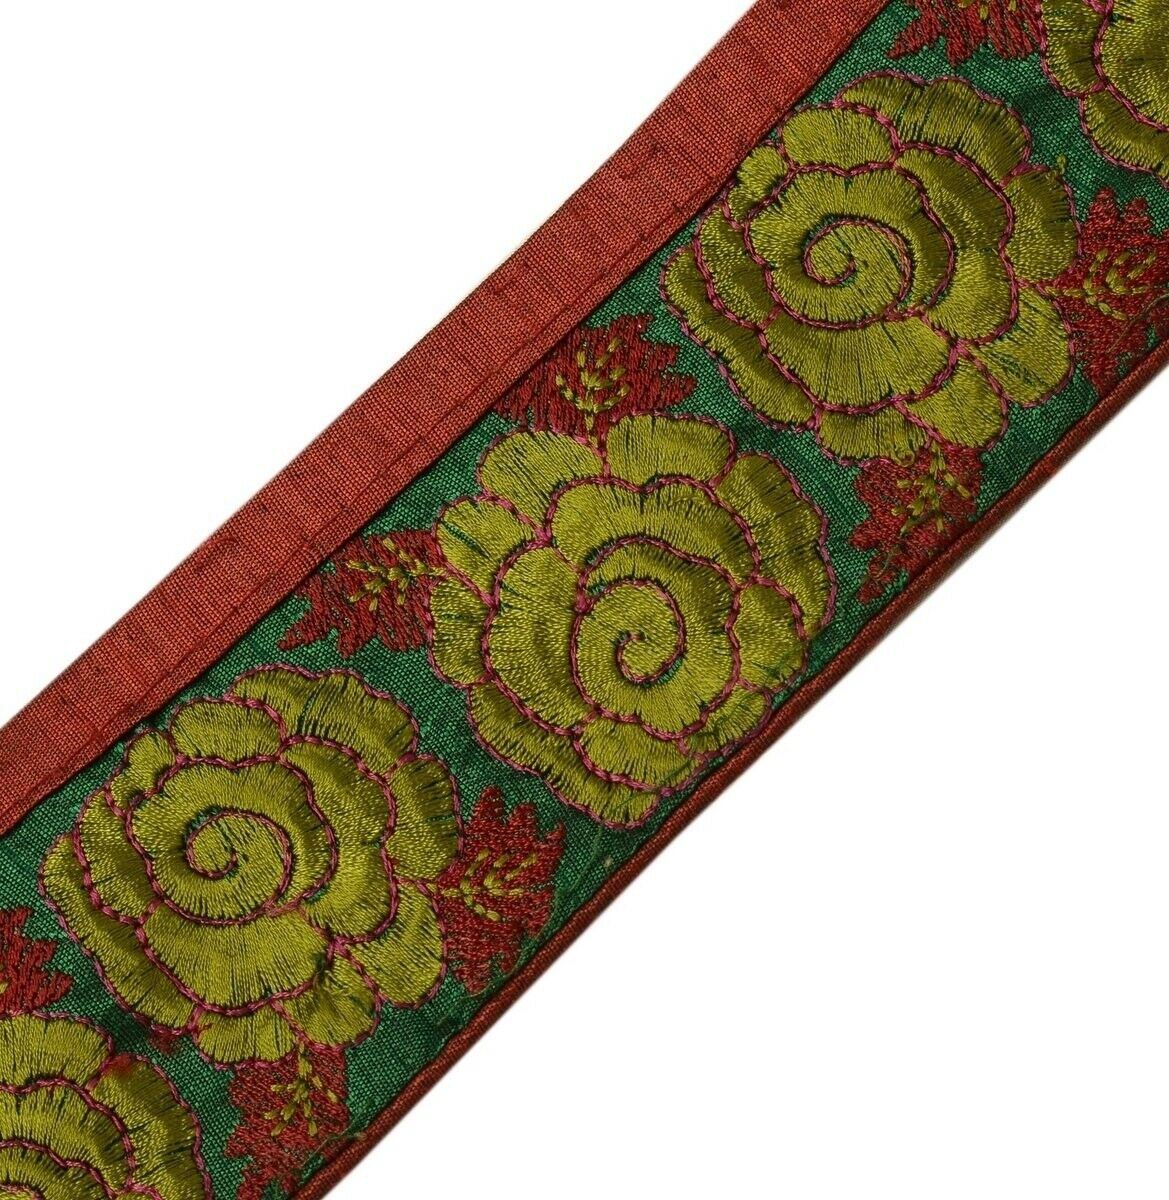 Vintage Sari Border Indian Craft Trim Embroidered Floral Green Ribbon Lace